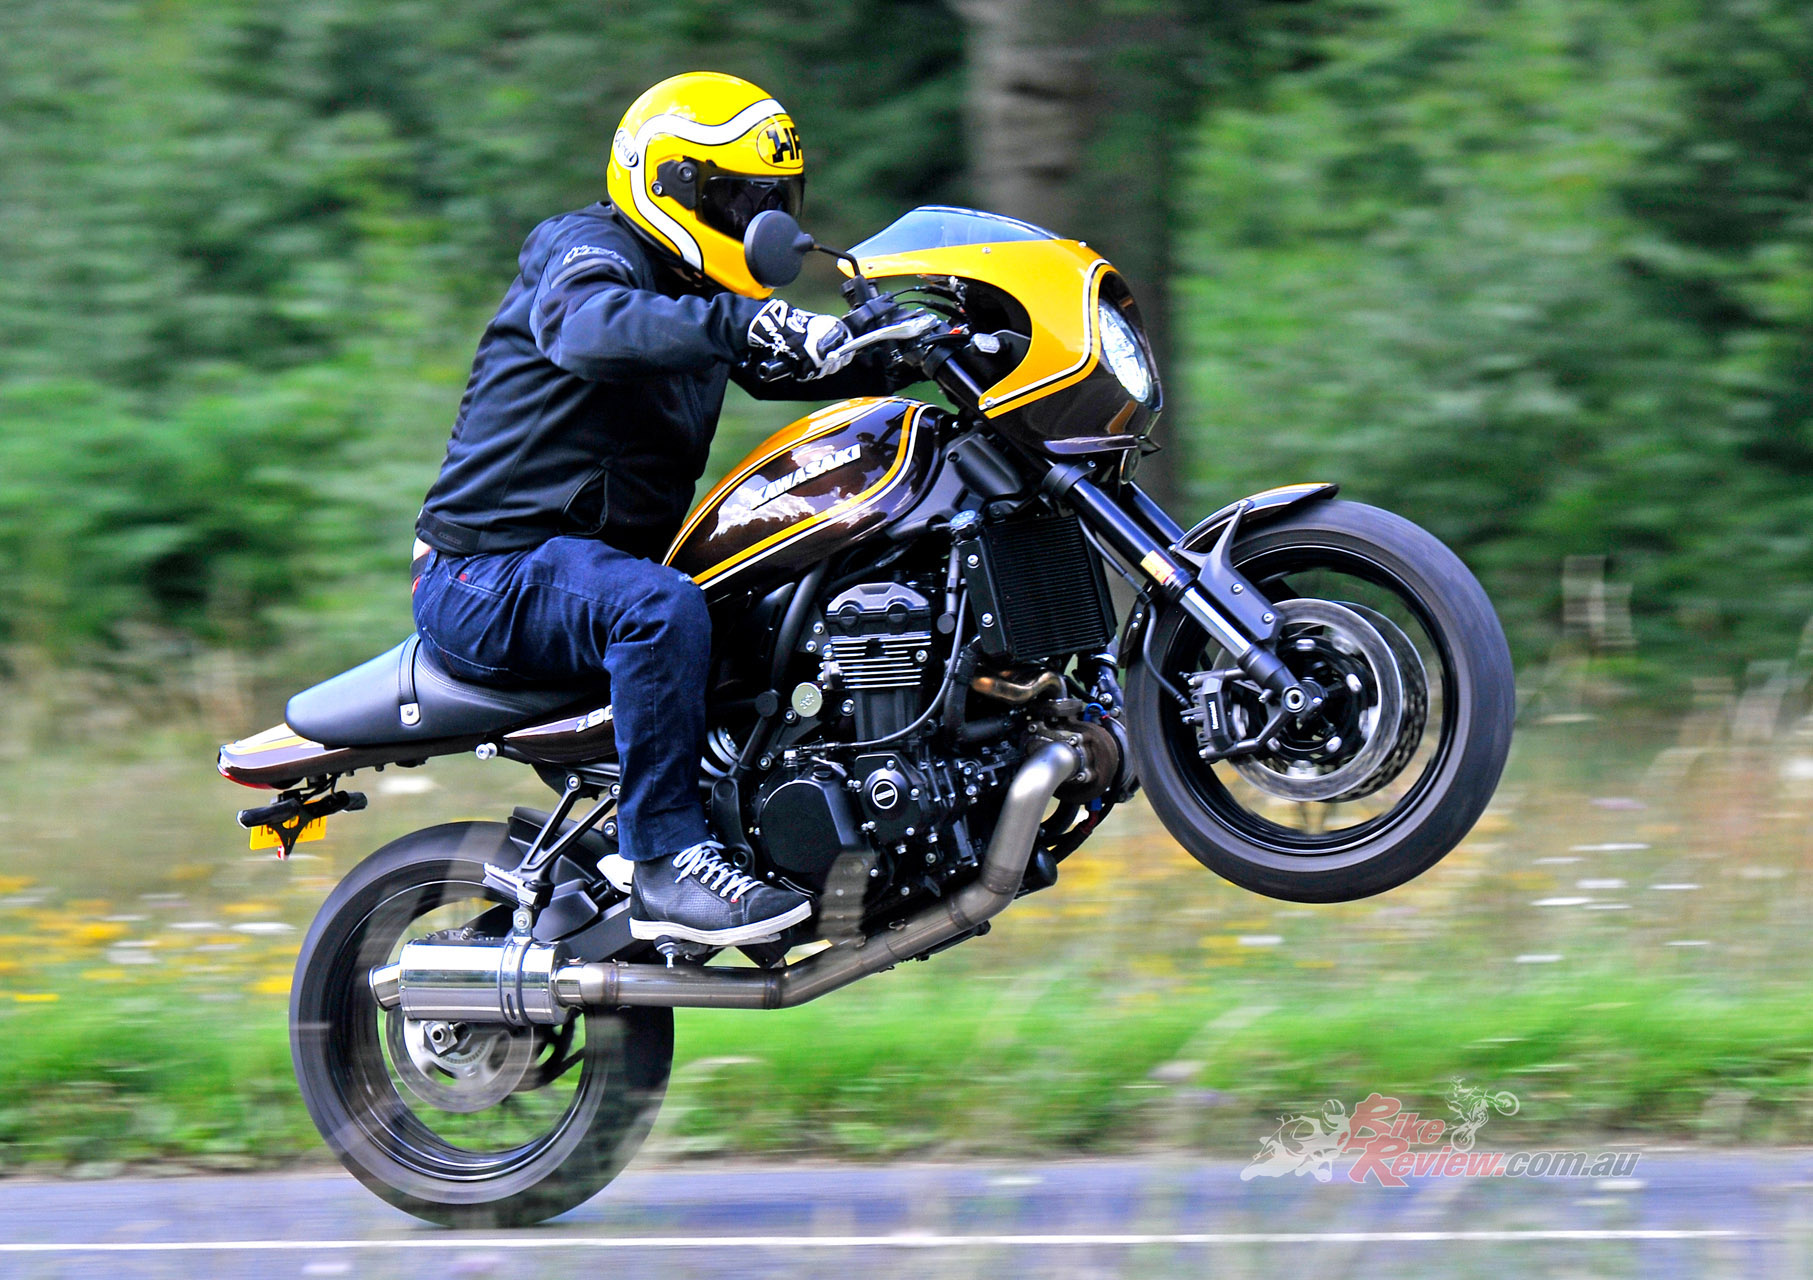 Kostume er nok tøj Tweaked: 200hp Turbocharged Kawasaki Z900RS Cafe - Bike Review